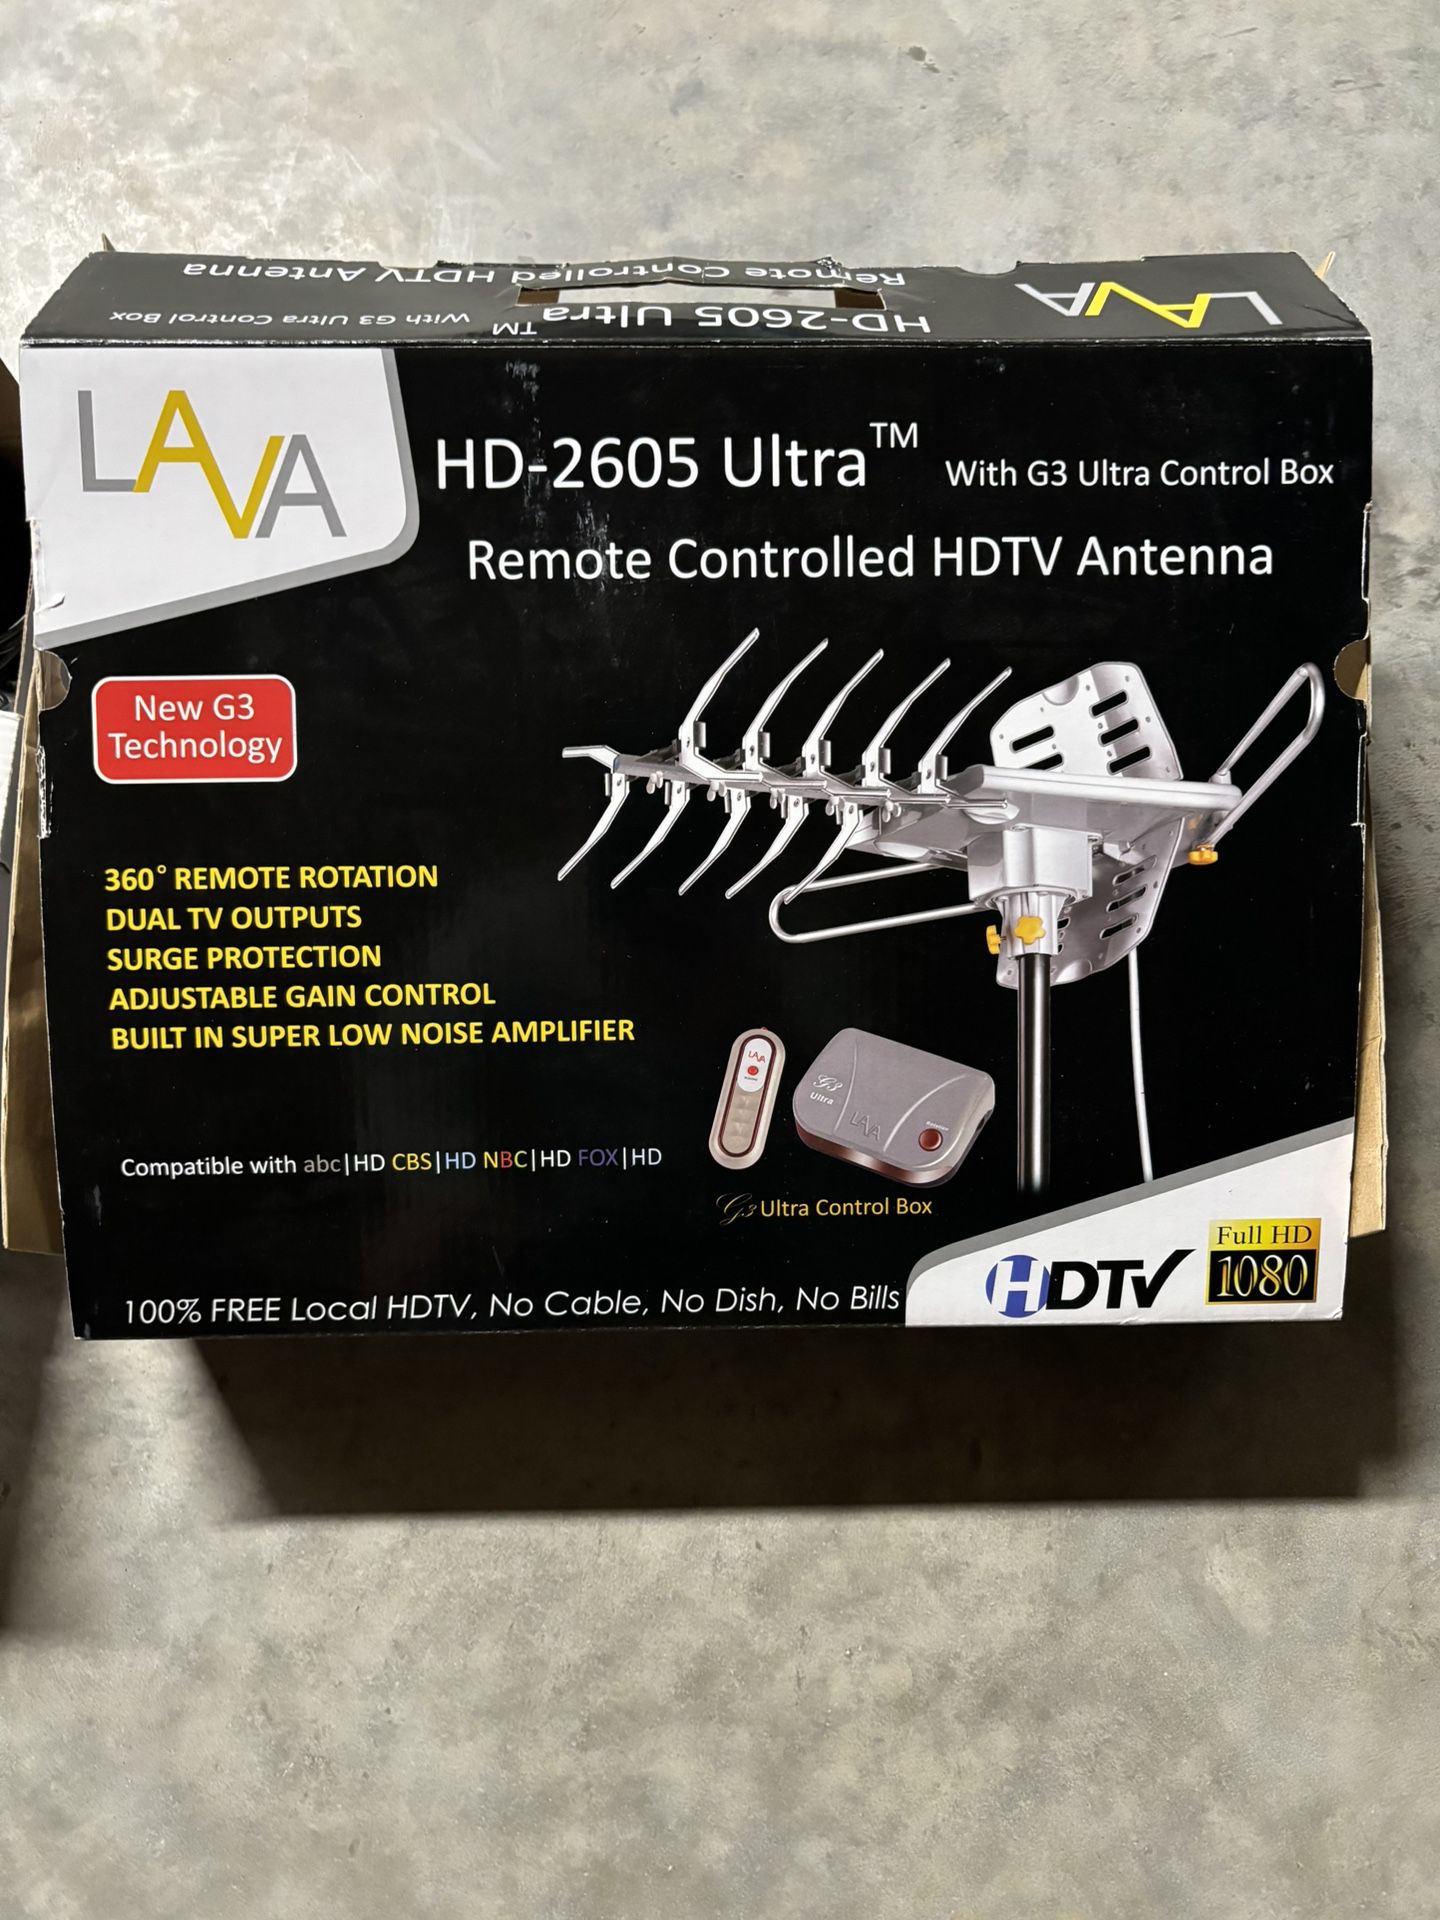 Lava HD-2605 Antenna